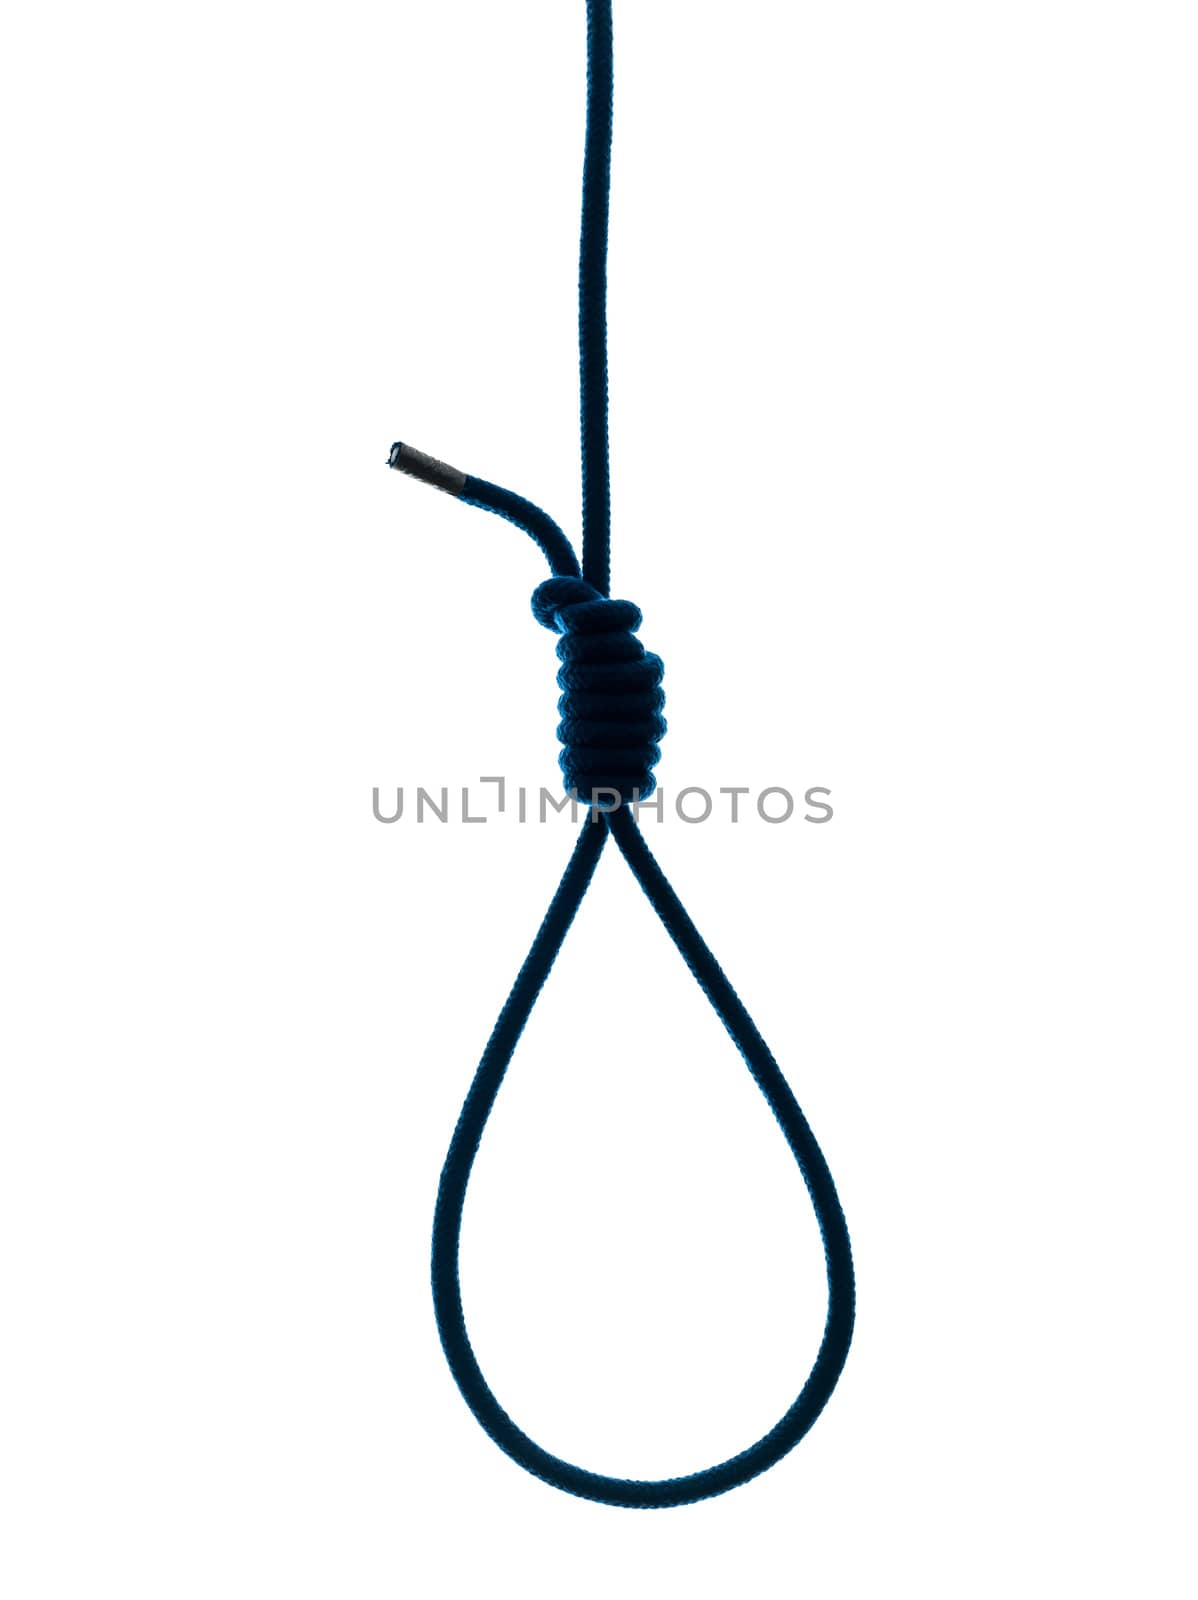 hangman noose silhouette by PIXSTILL